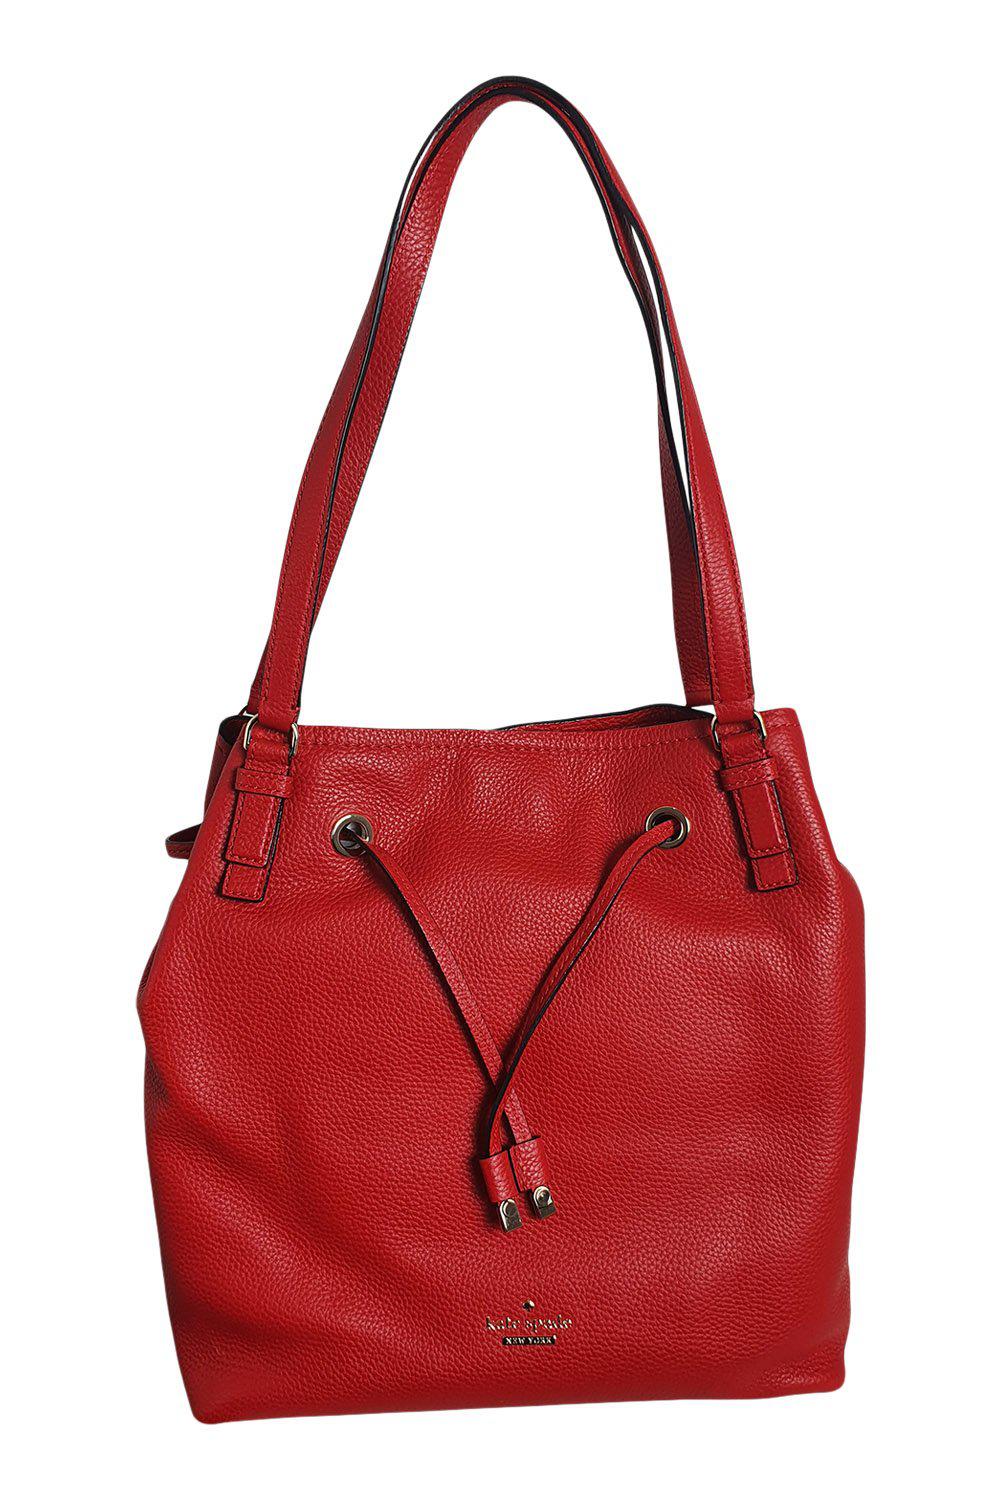 Vintage Kate Spade Red Leather Tote Bag Elena Wellesley | eBay